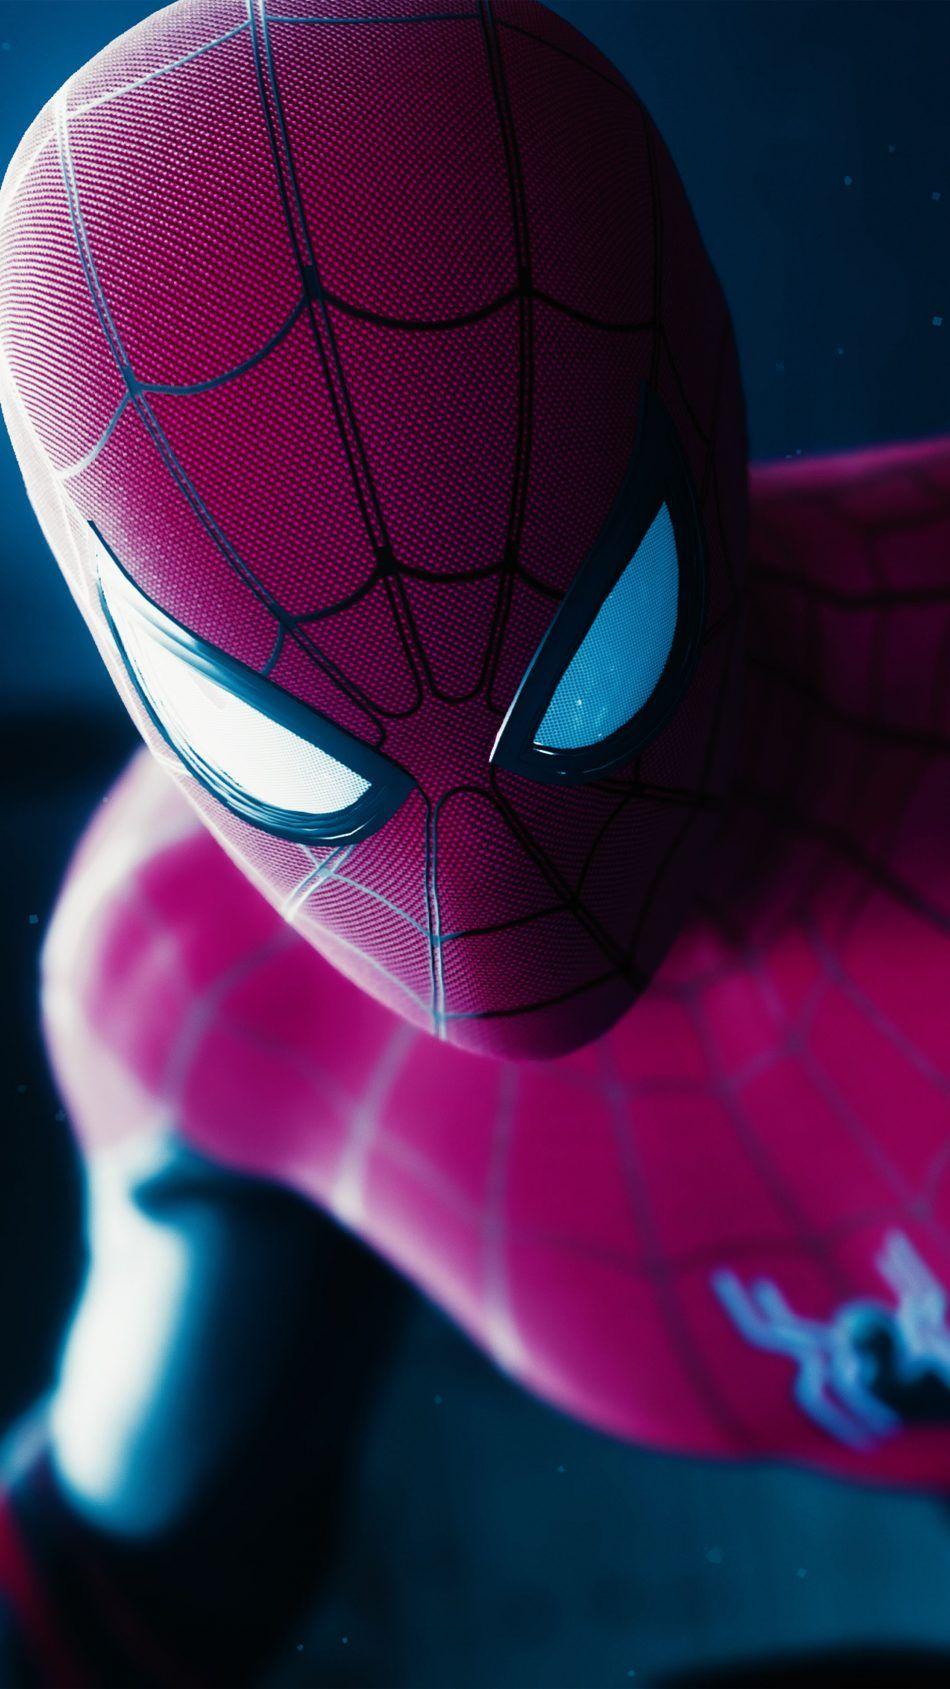 Spider Man Far From Home PS4 2019 4K Ultra HD Mobile Wallpaper. Marvel Superhero Posters, Marvel Wallpaper Hd, Spiderman